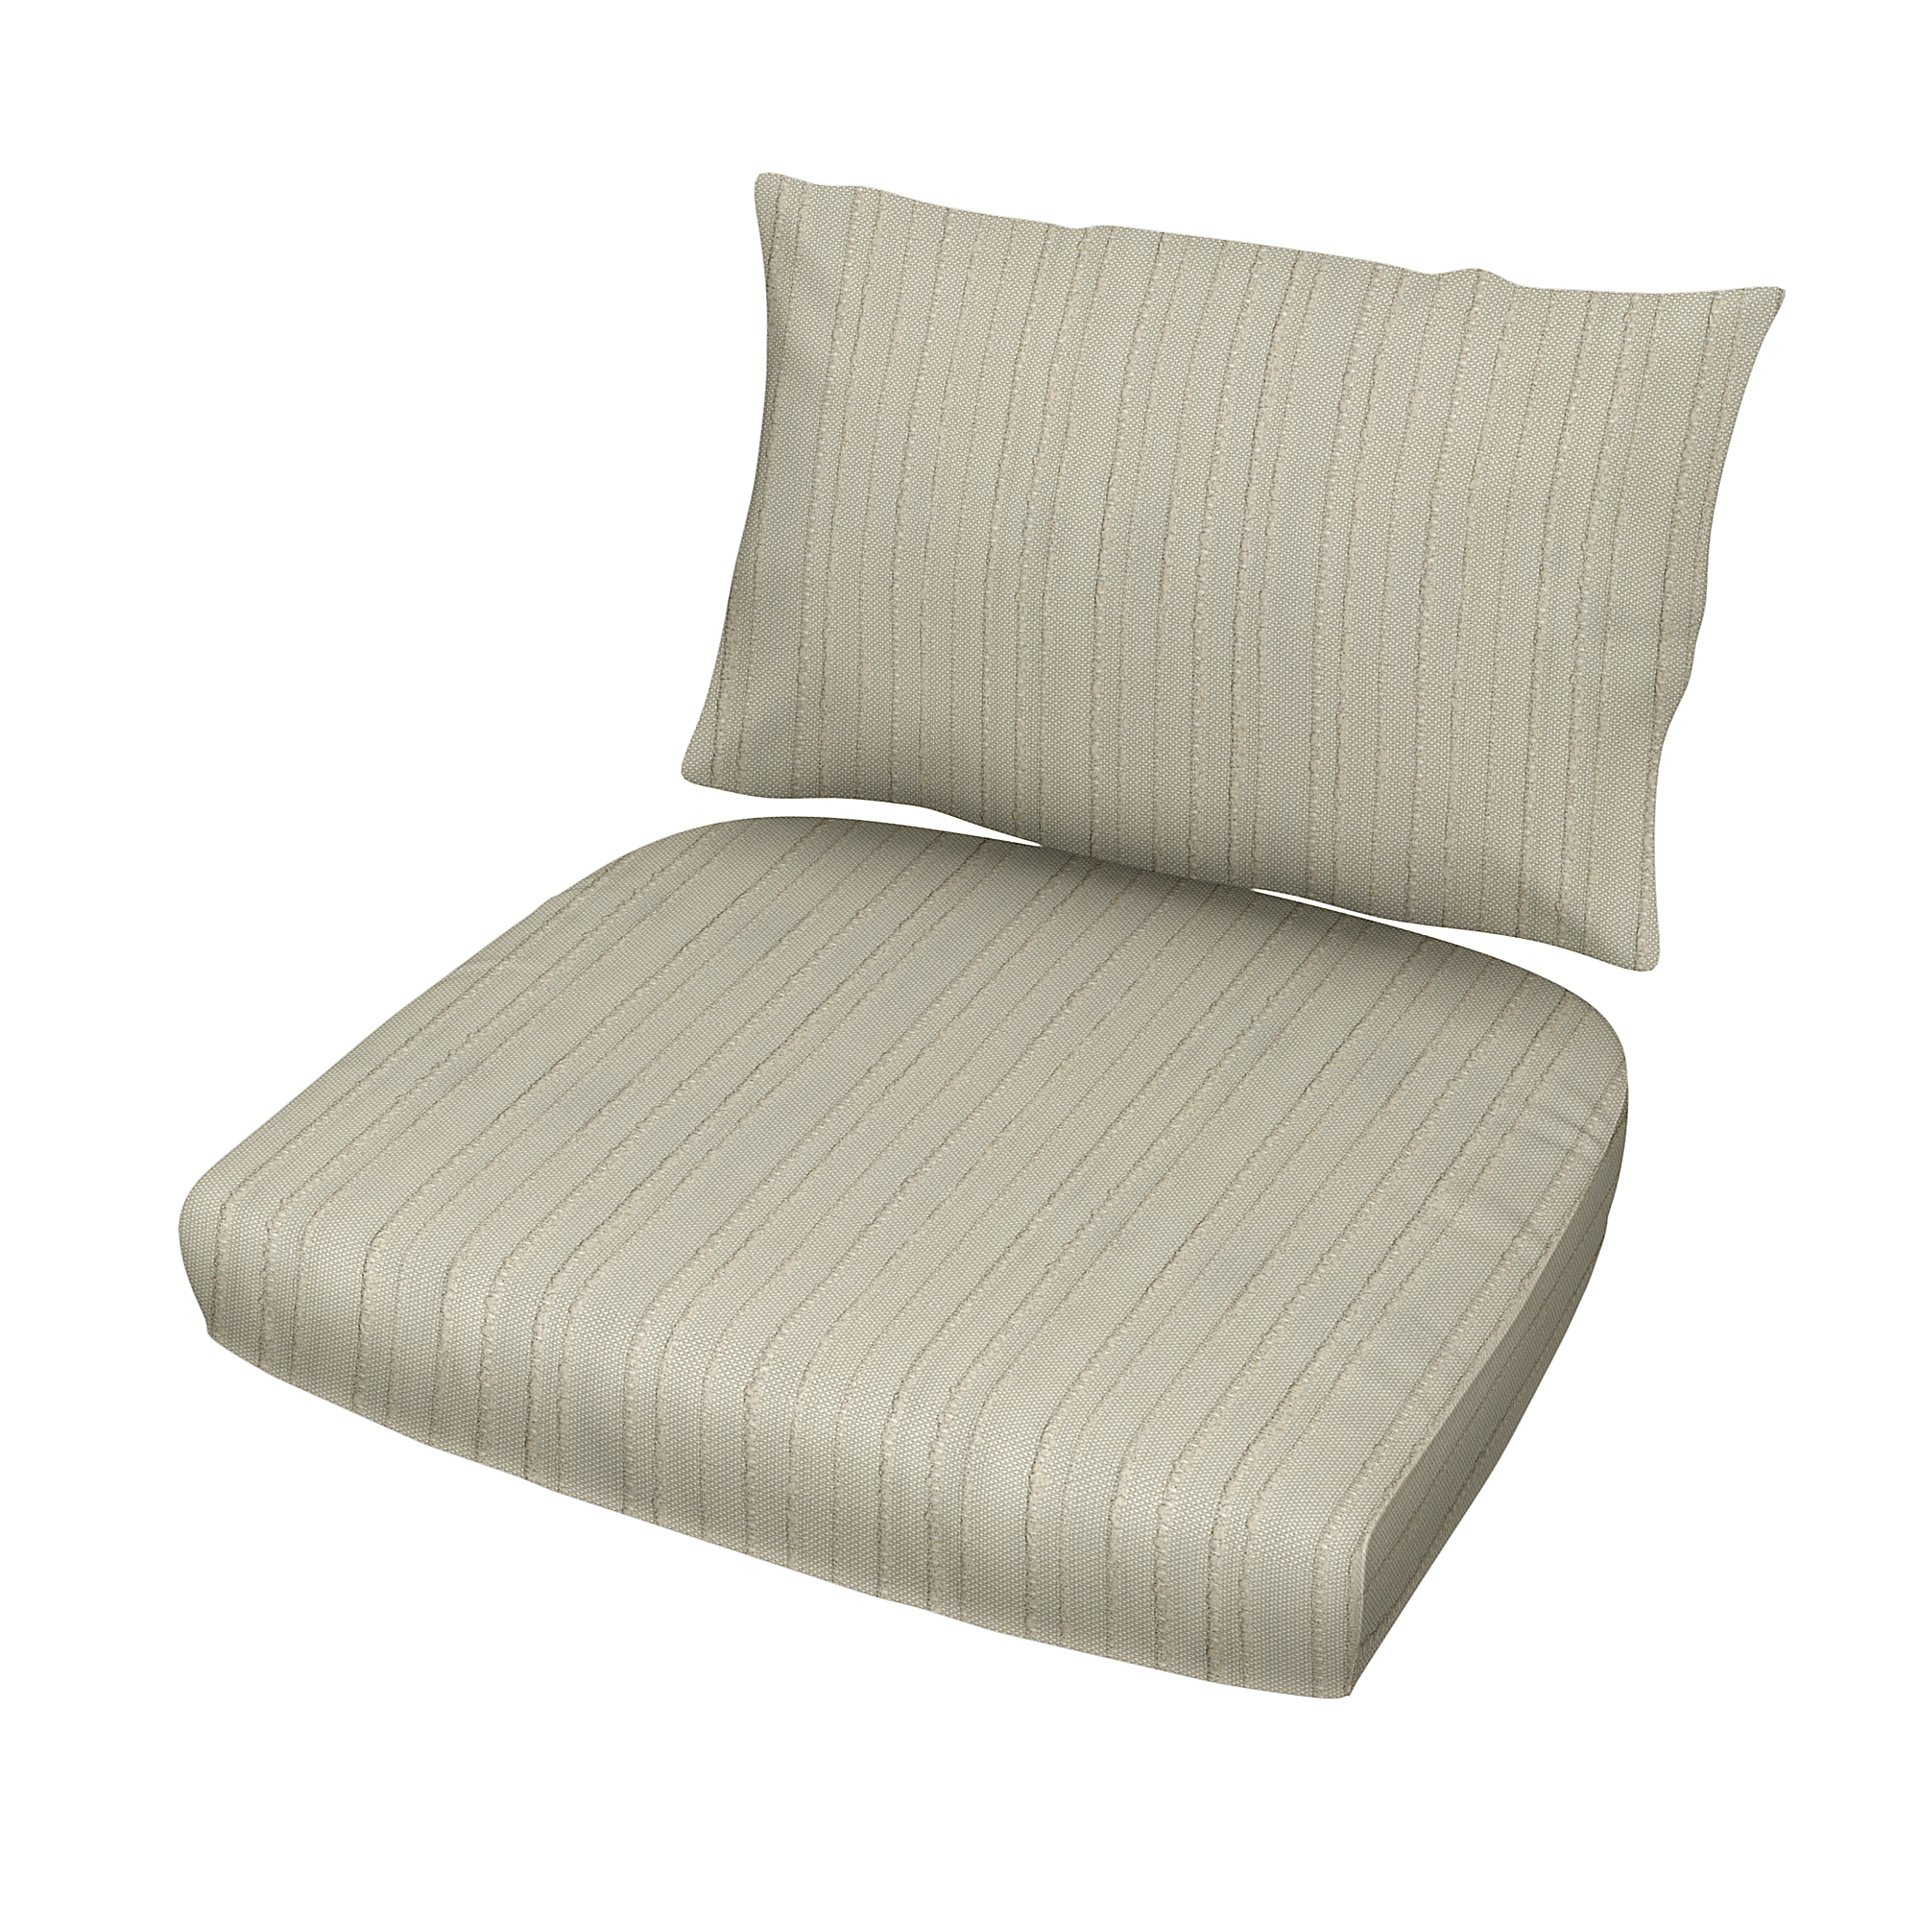 IKEA - Stockholm Rattan Chair Cushion Cover Set, Sand Beige, Outdoor - Bemz